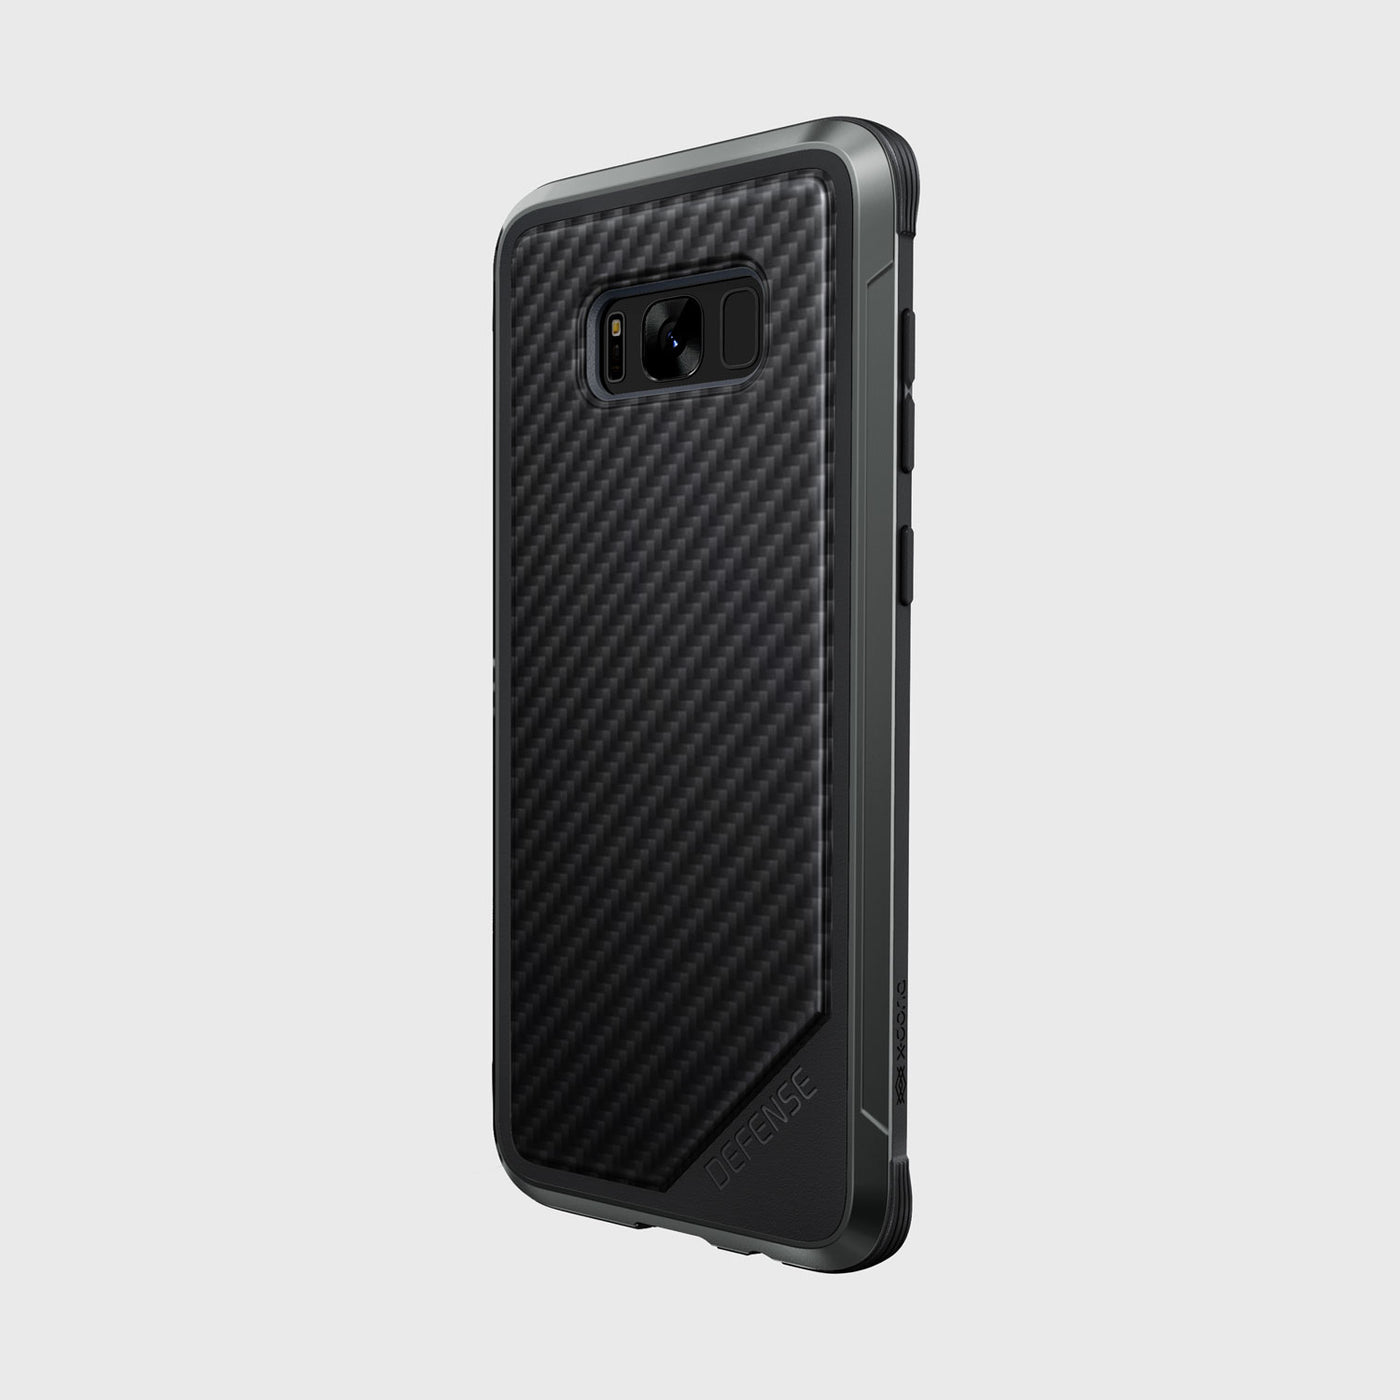 Samsung Galaxy S8 Plus Case Raptic Lux Black Carbon Fiber